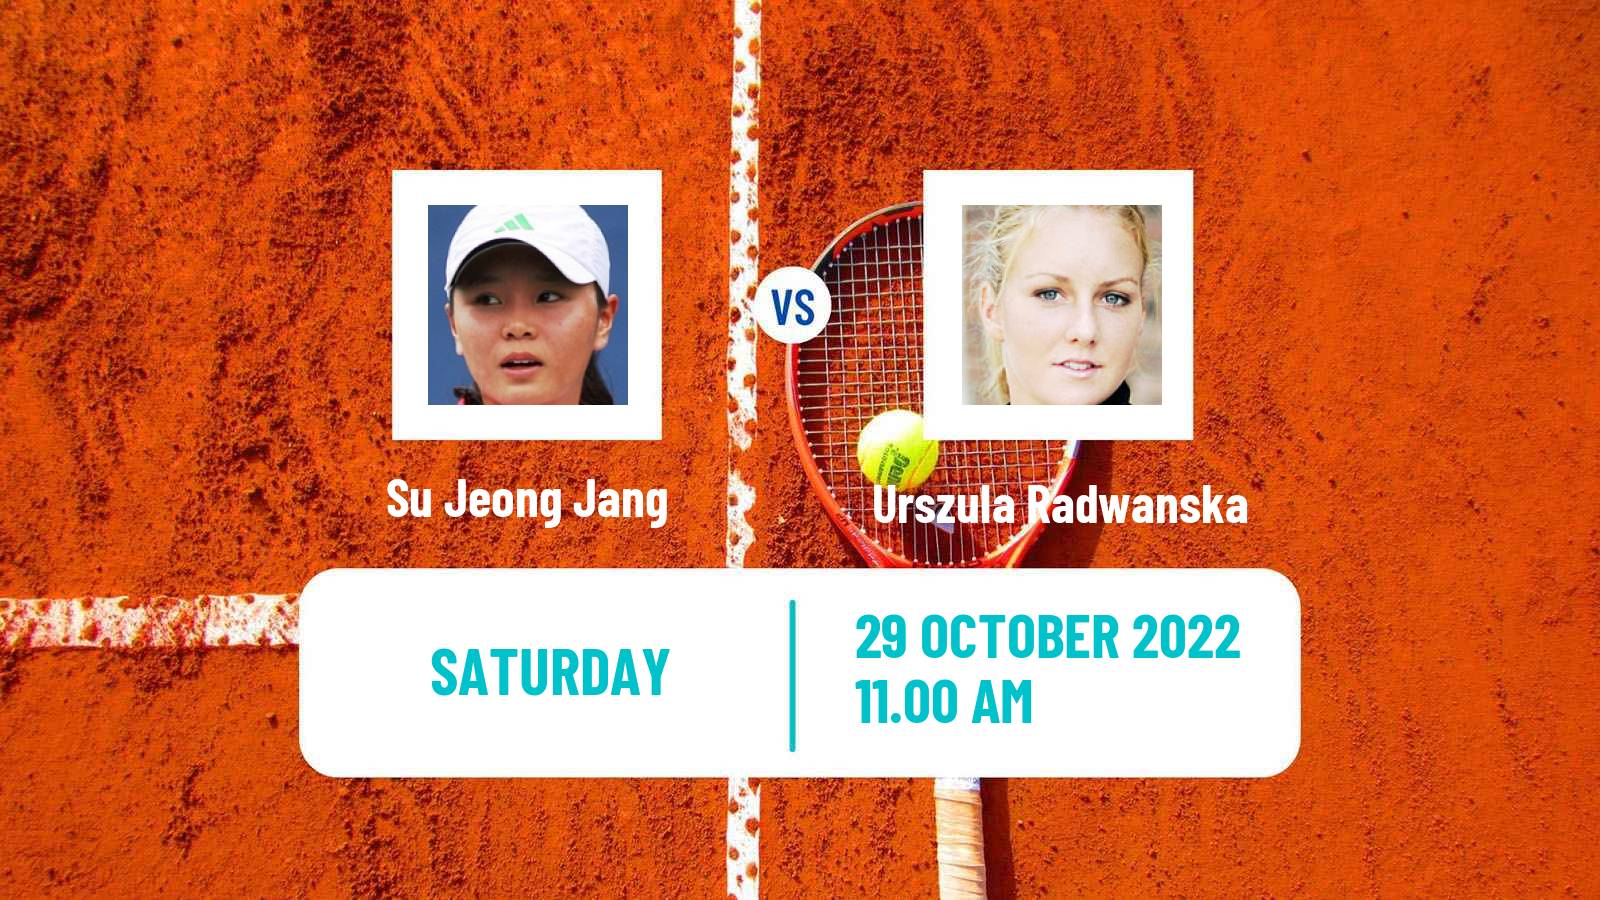 Tennis ITF Tournaments Su Jeong Jang - Urszula Radwanska